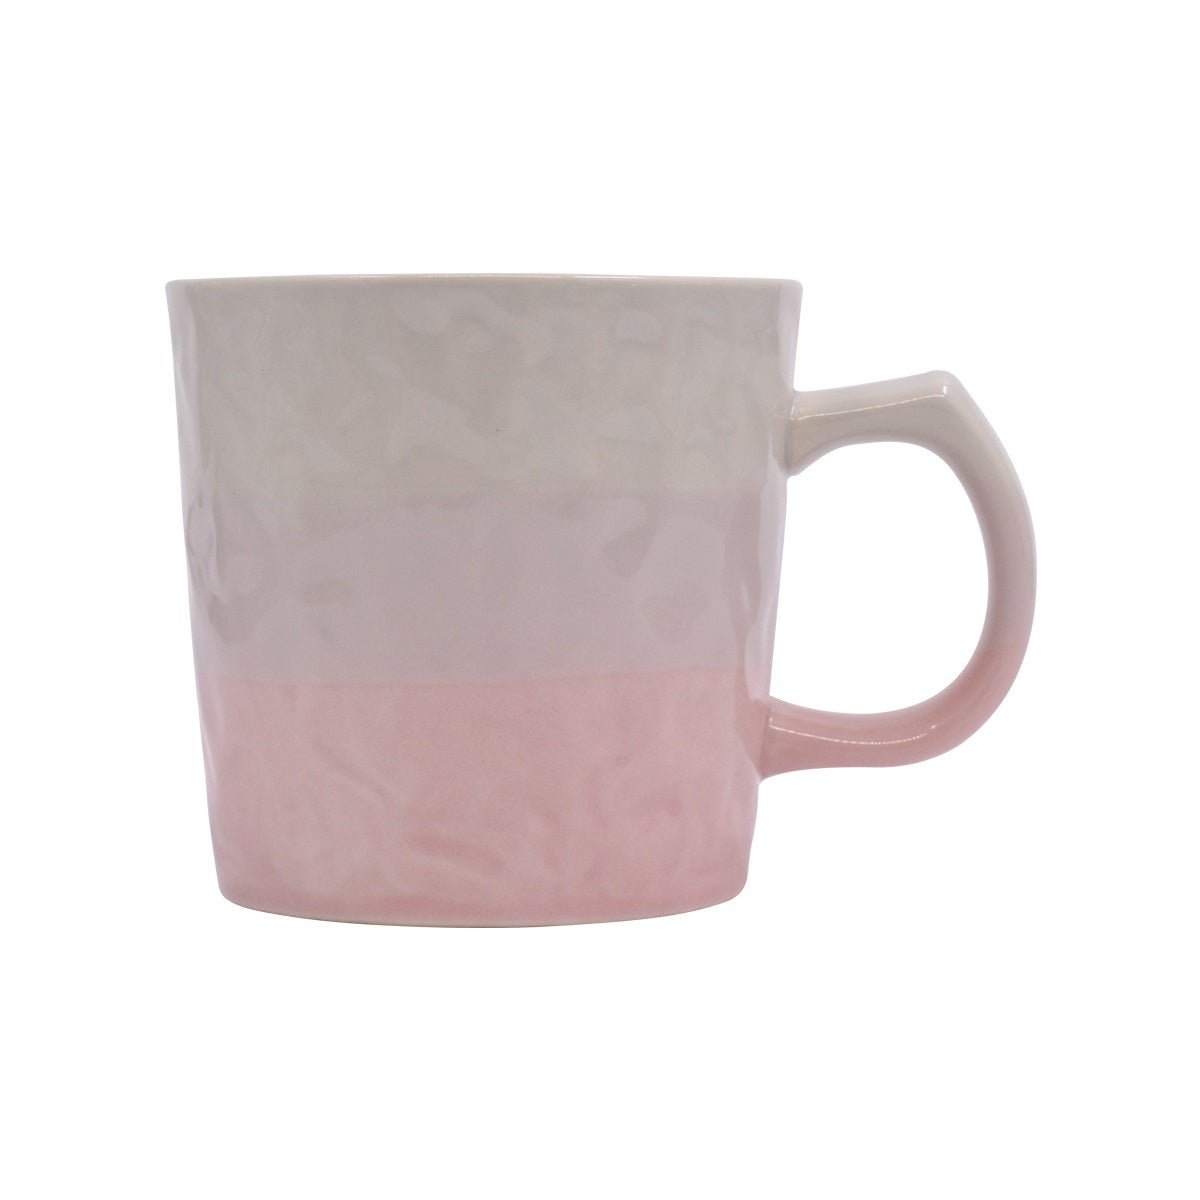 Ceramic Coffee or Tea Mug with Handle - 250ml (1394-1-C)